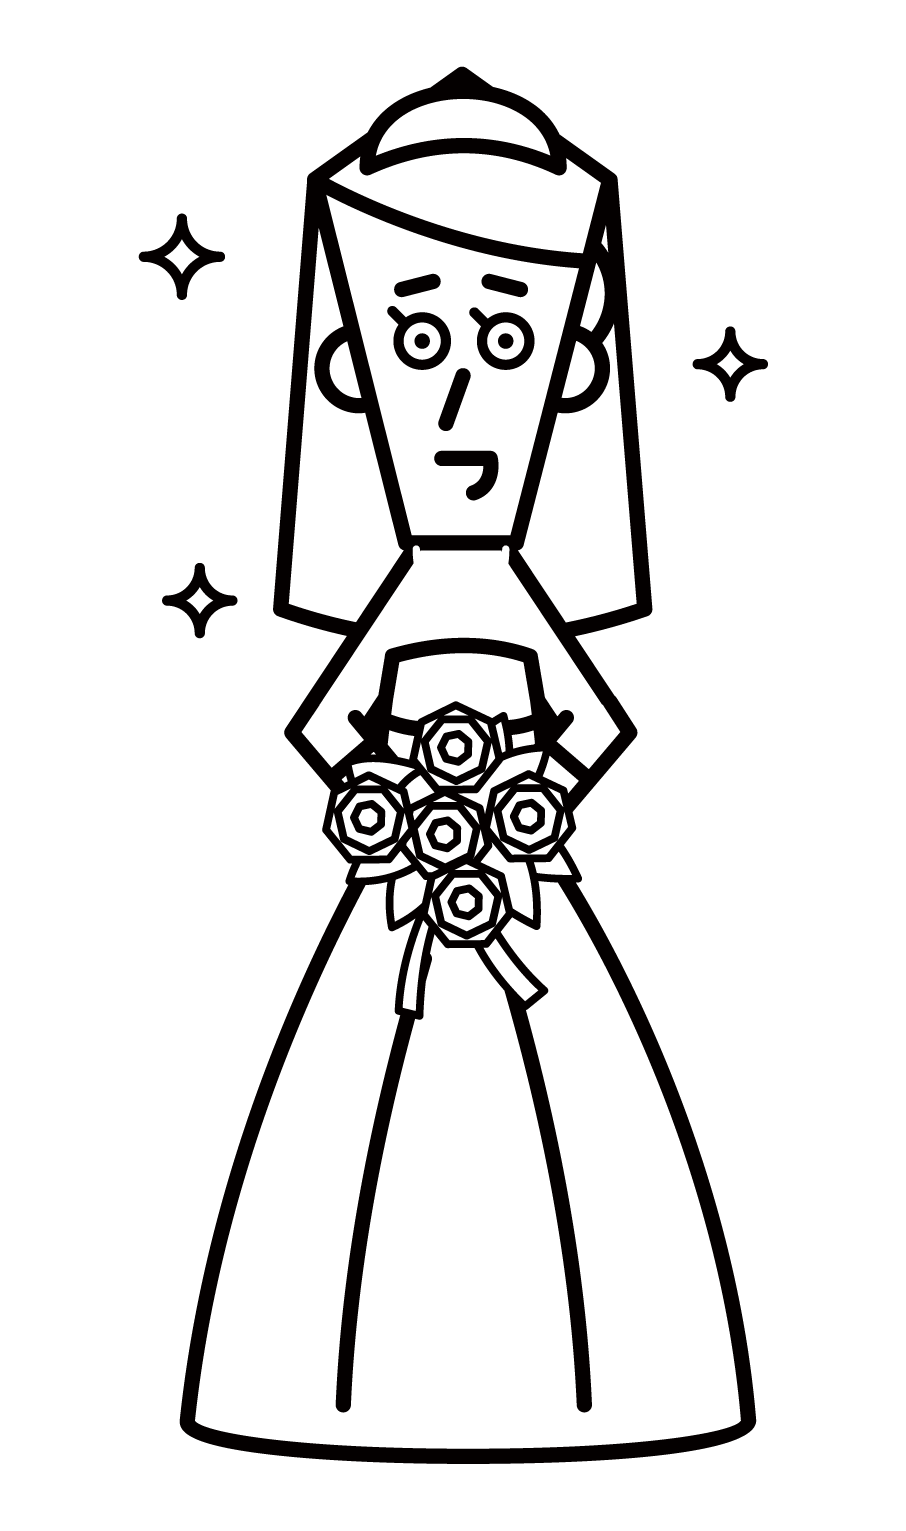 Illustration of bride (woman) in wedding dress